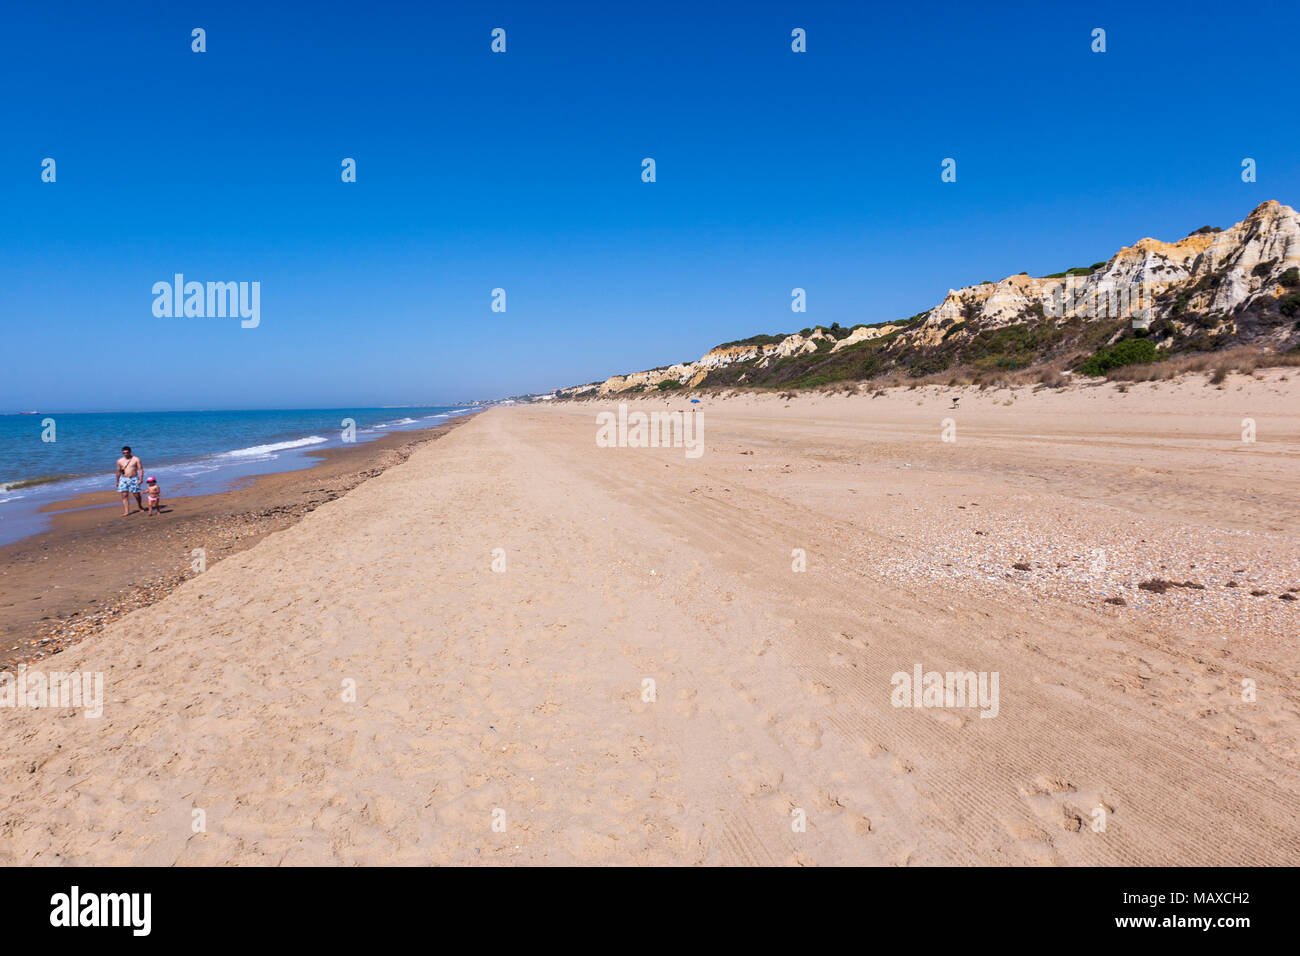 Parador Mazagon beach, province de Huelva, Andalousie, Espagne Banque D'Images